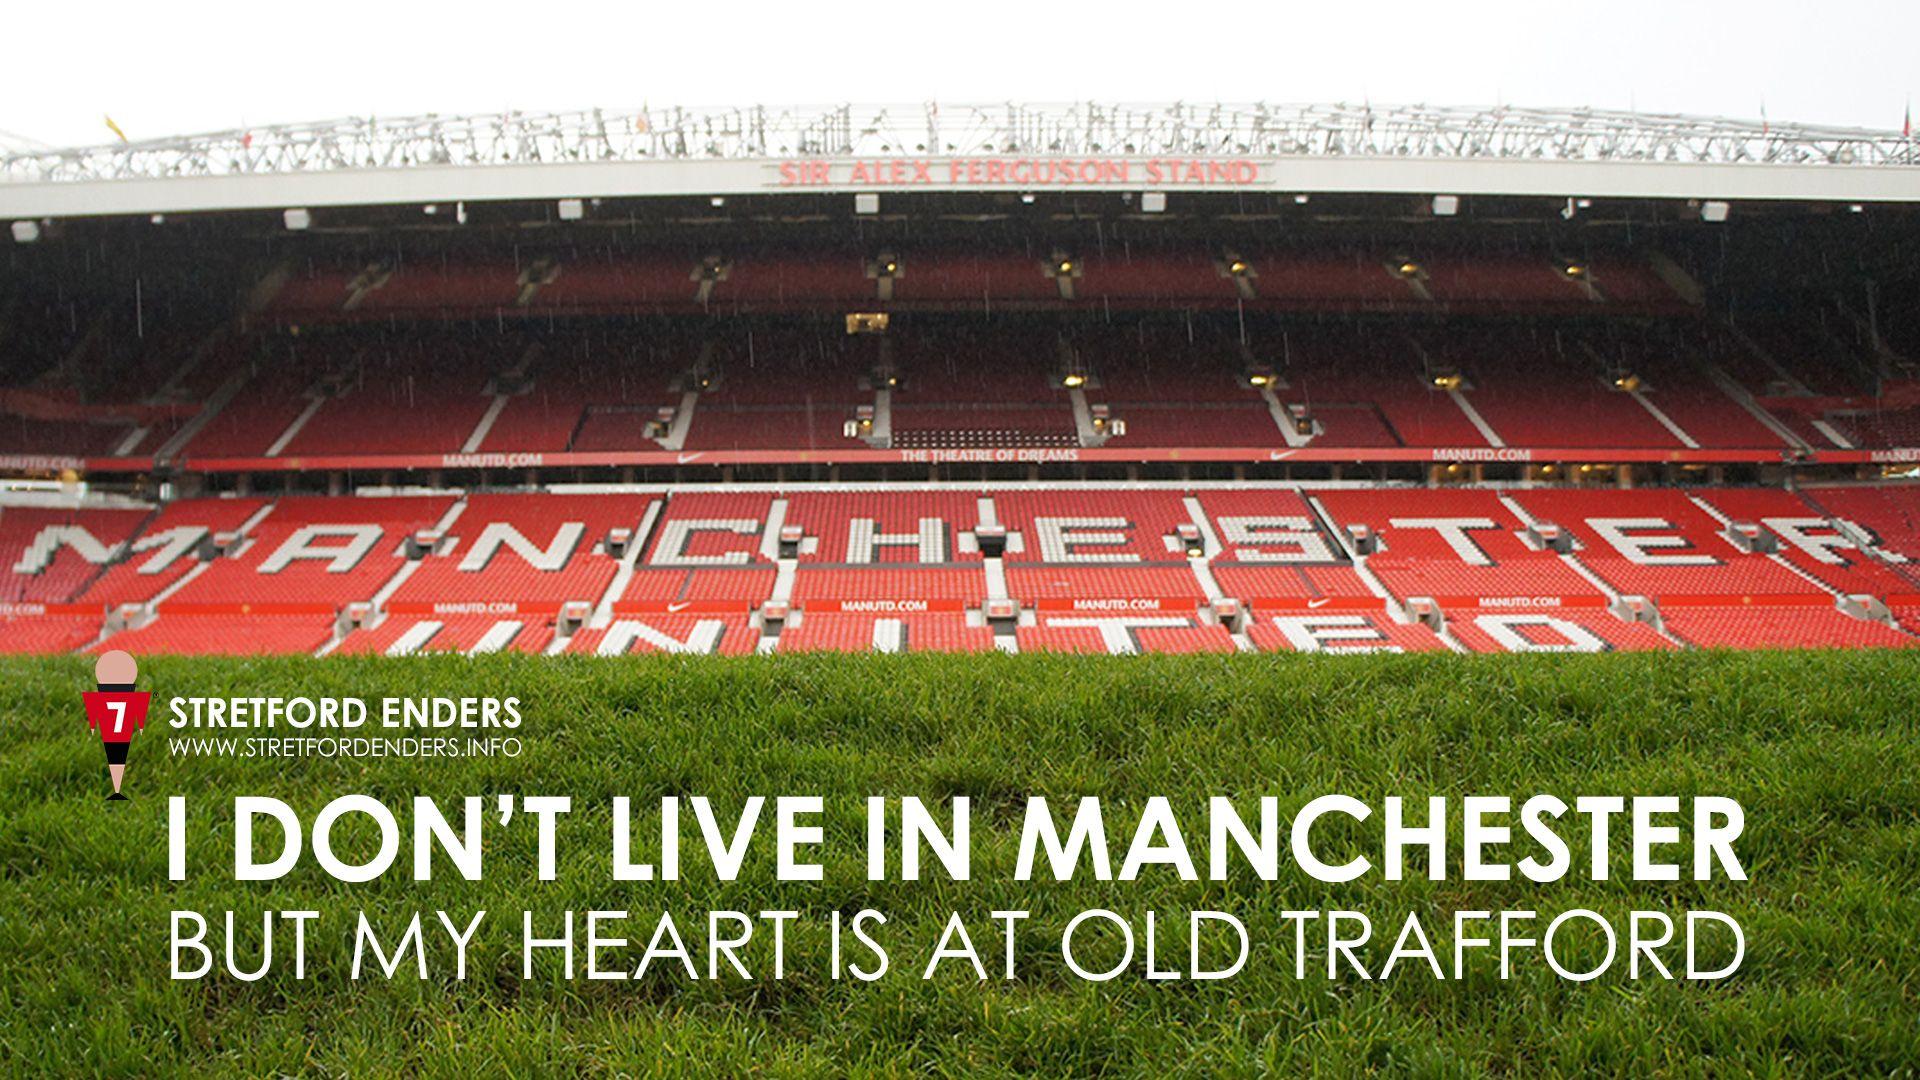 Manchester United Wallpaper 920×080 Pixels. Sports